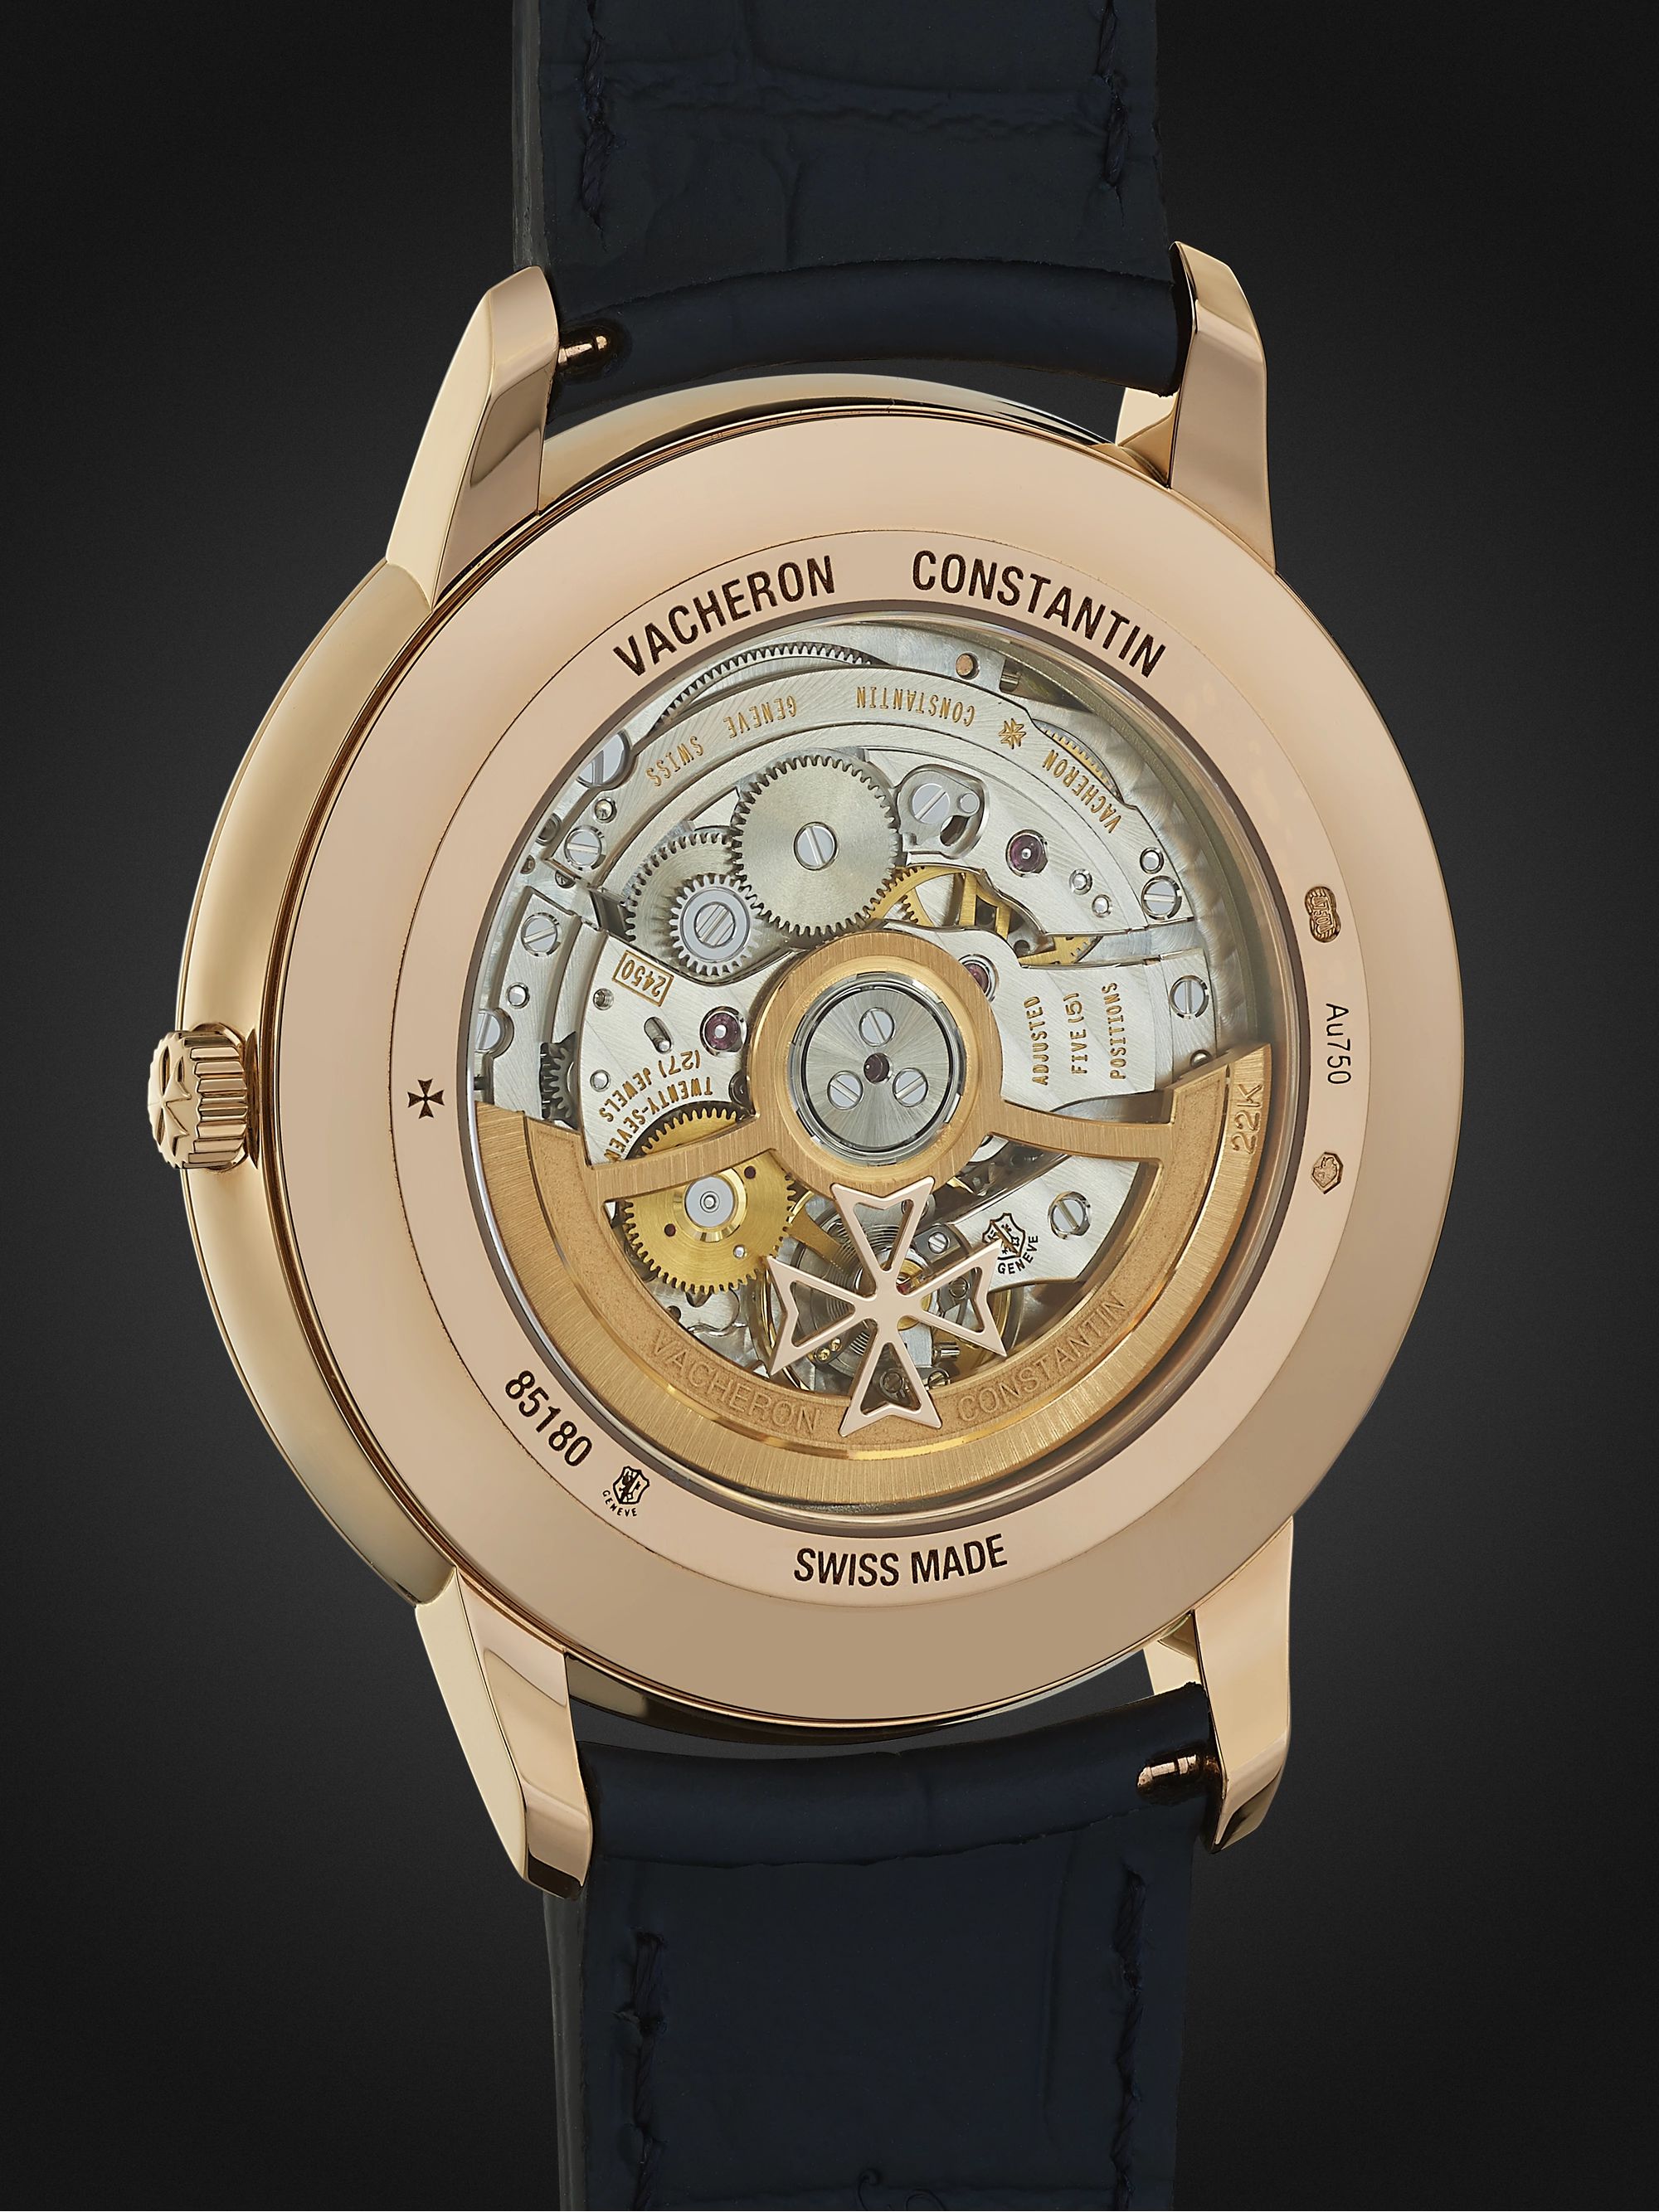 VACHERON CONSTANTIN Patrimony Automatic 40mm 18-Karat Pink Gold and Alligator Watch, Ref. No. 85180/000R-B515